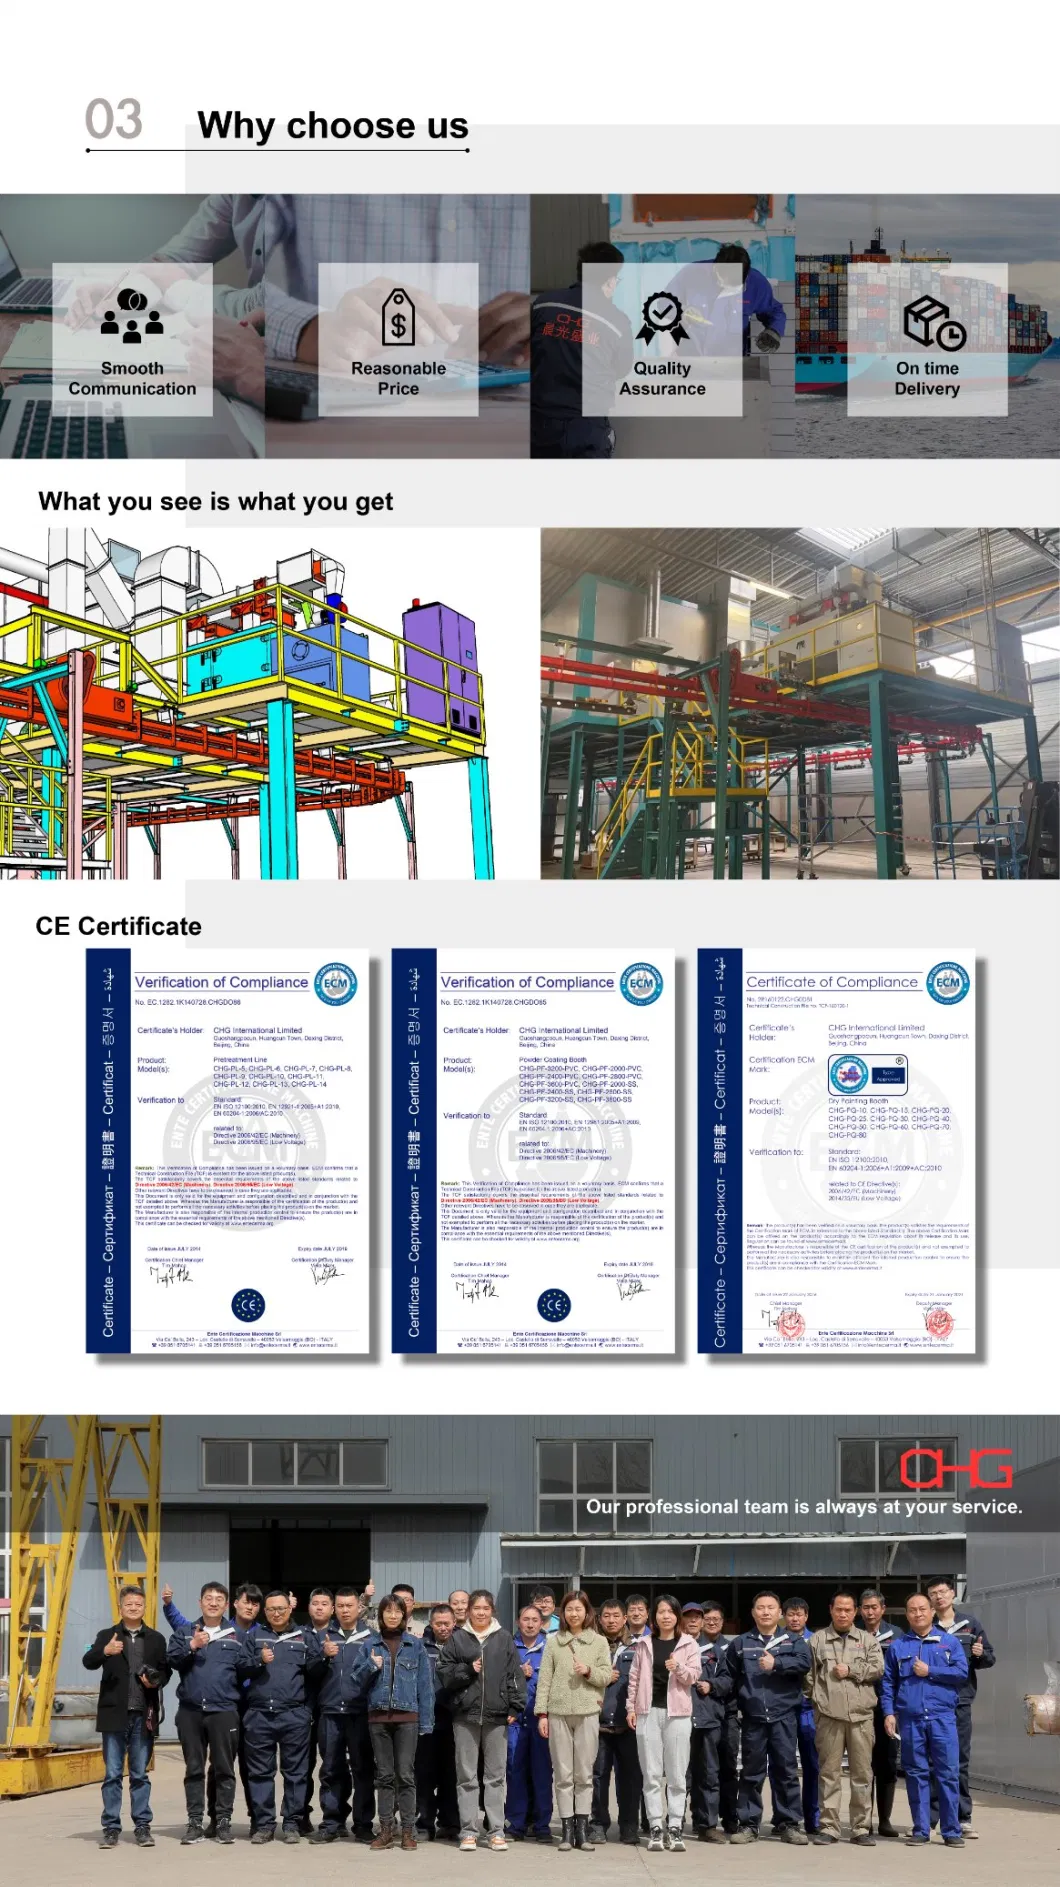 Powder Coating Production Line for Aluminium Profile Accumulation Conveyor System